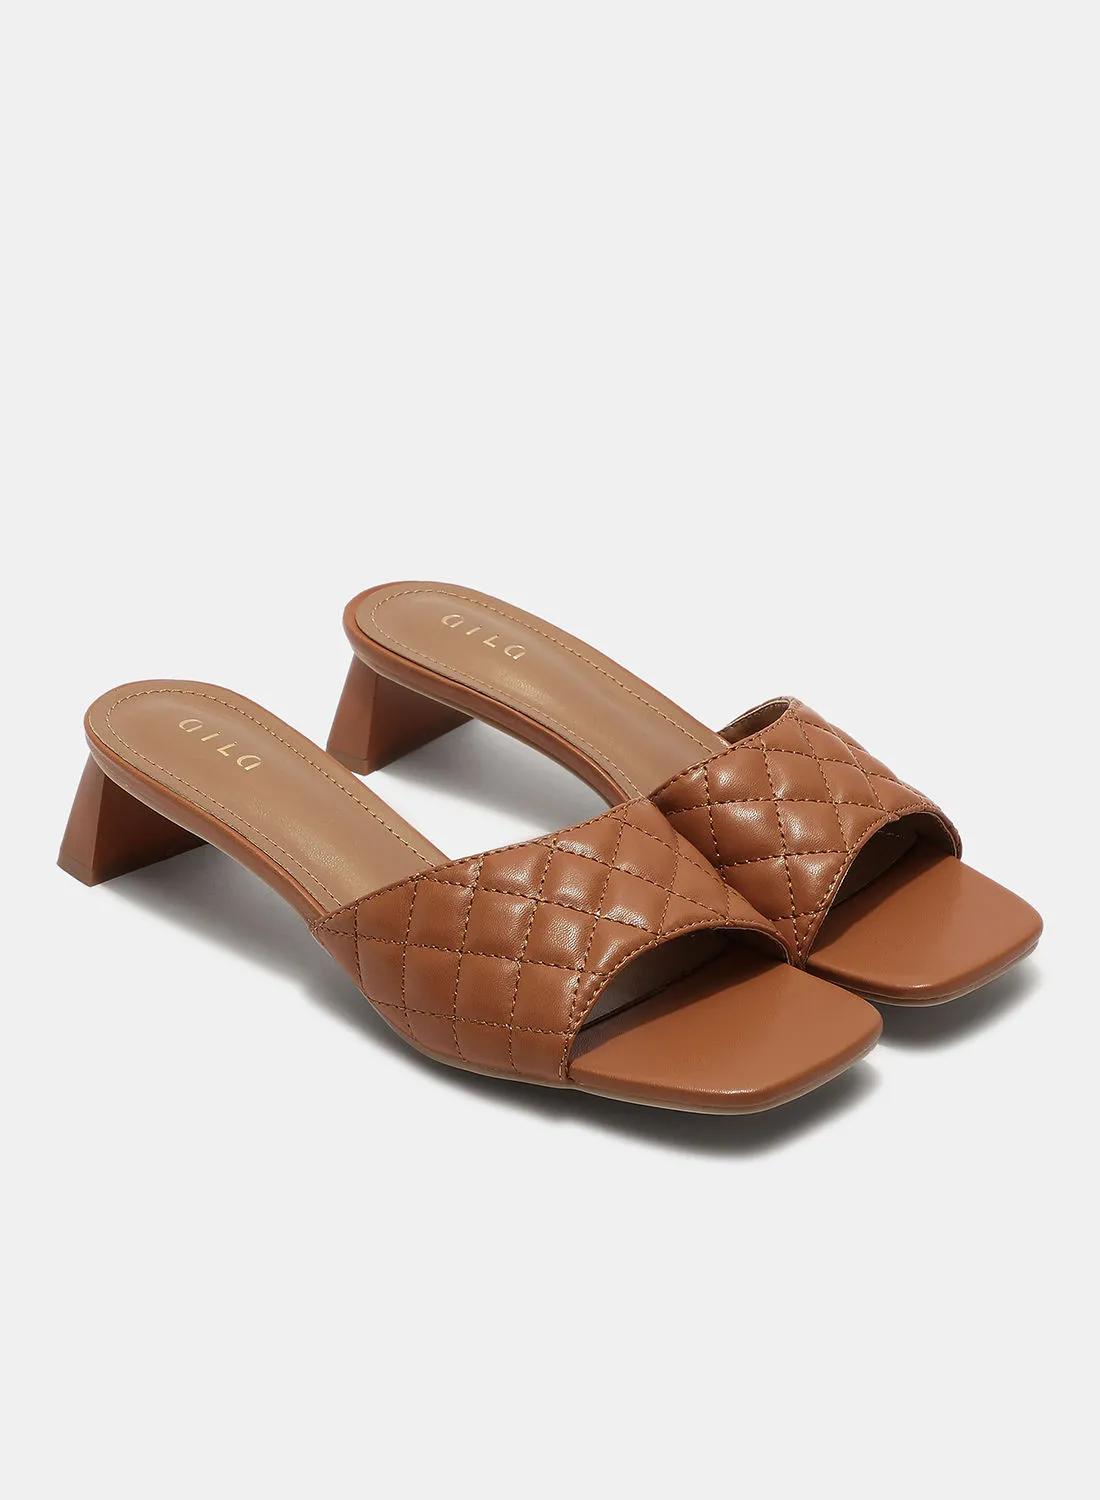 Aila Fashionable Heeled Sandals Tan